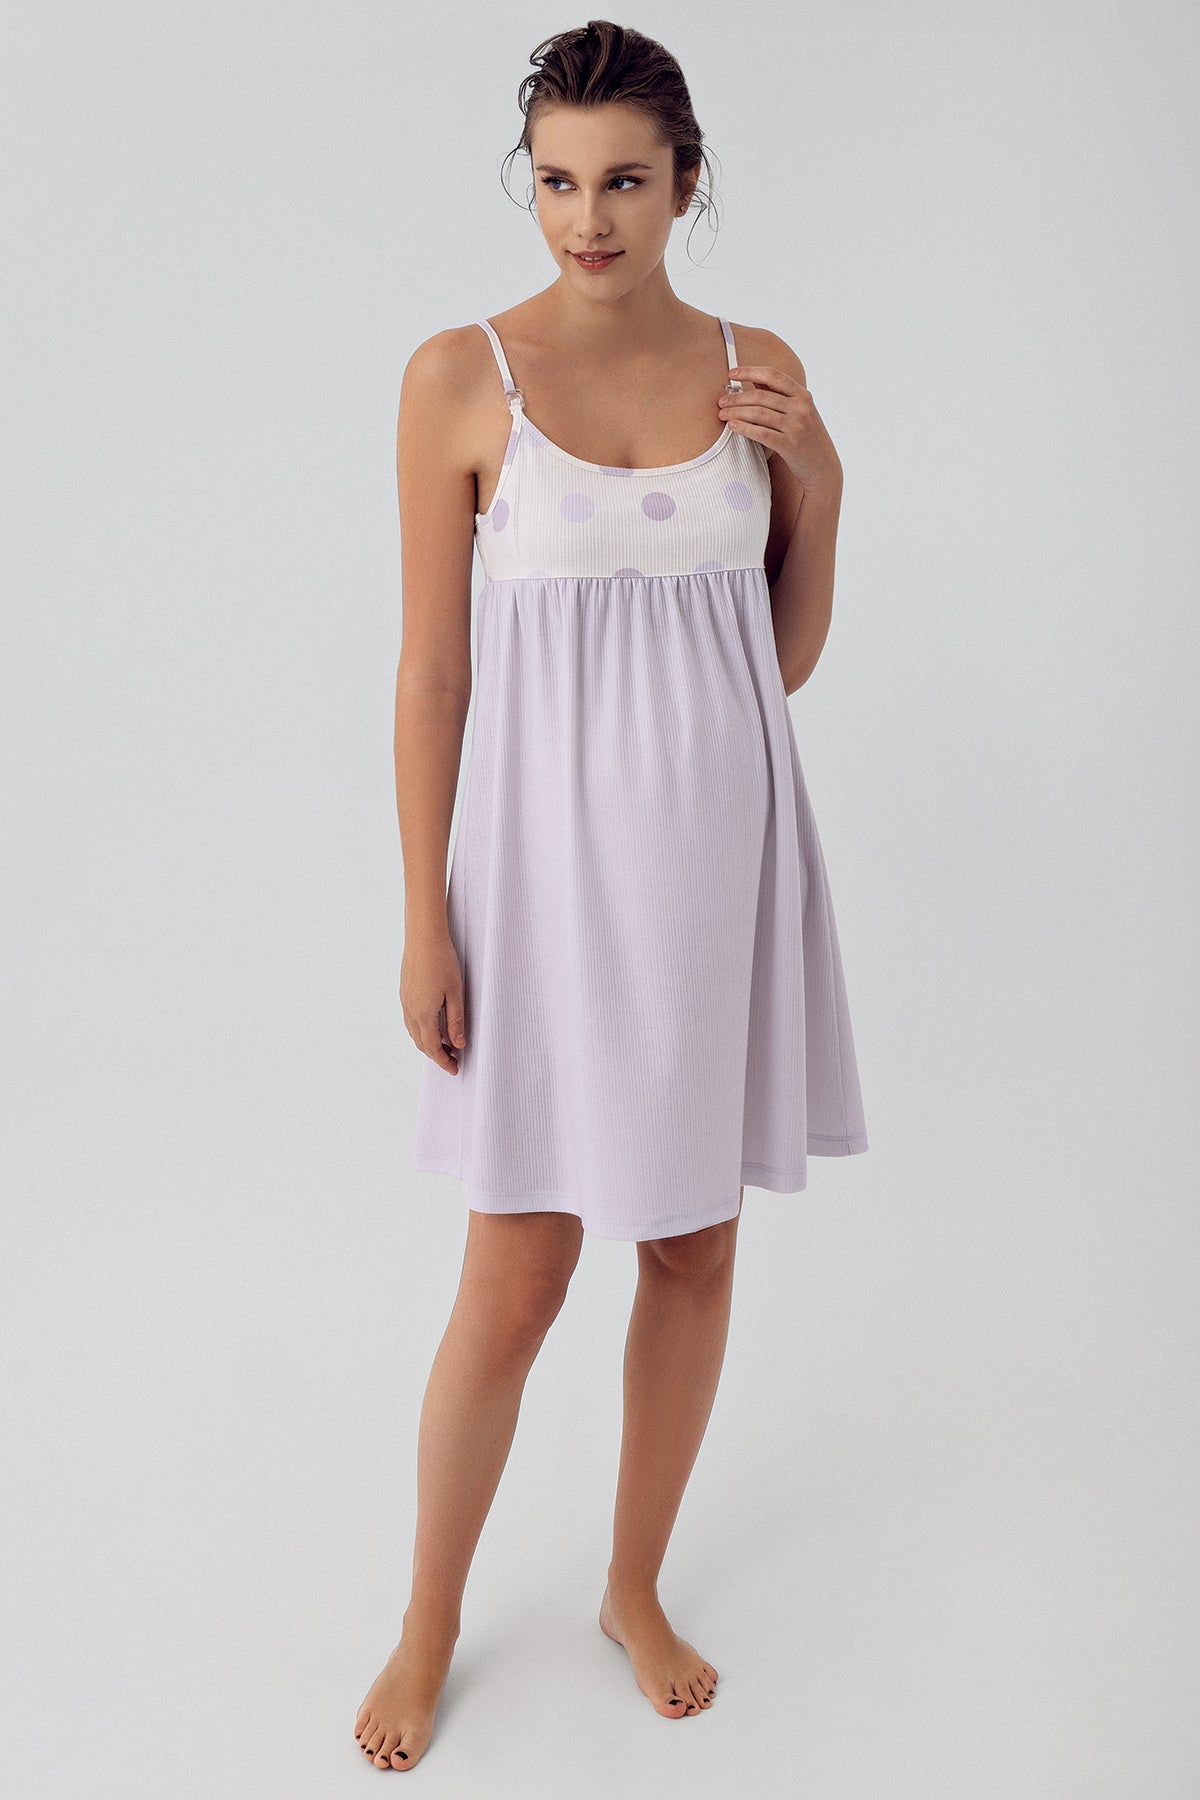 Shopymommy 16101 Polka Dot Strap Maternity & Nursing Nightgown Lilac